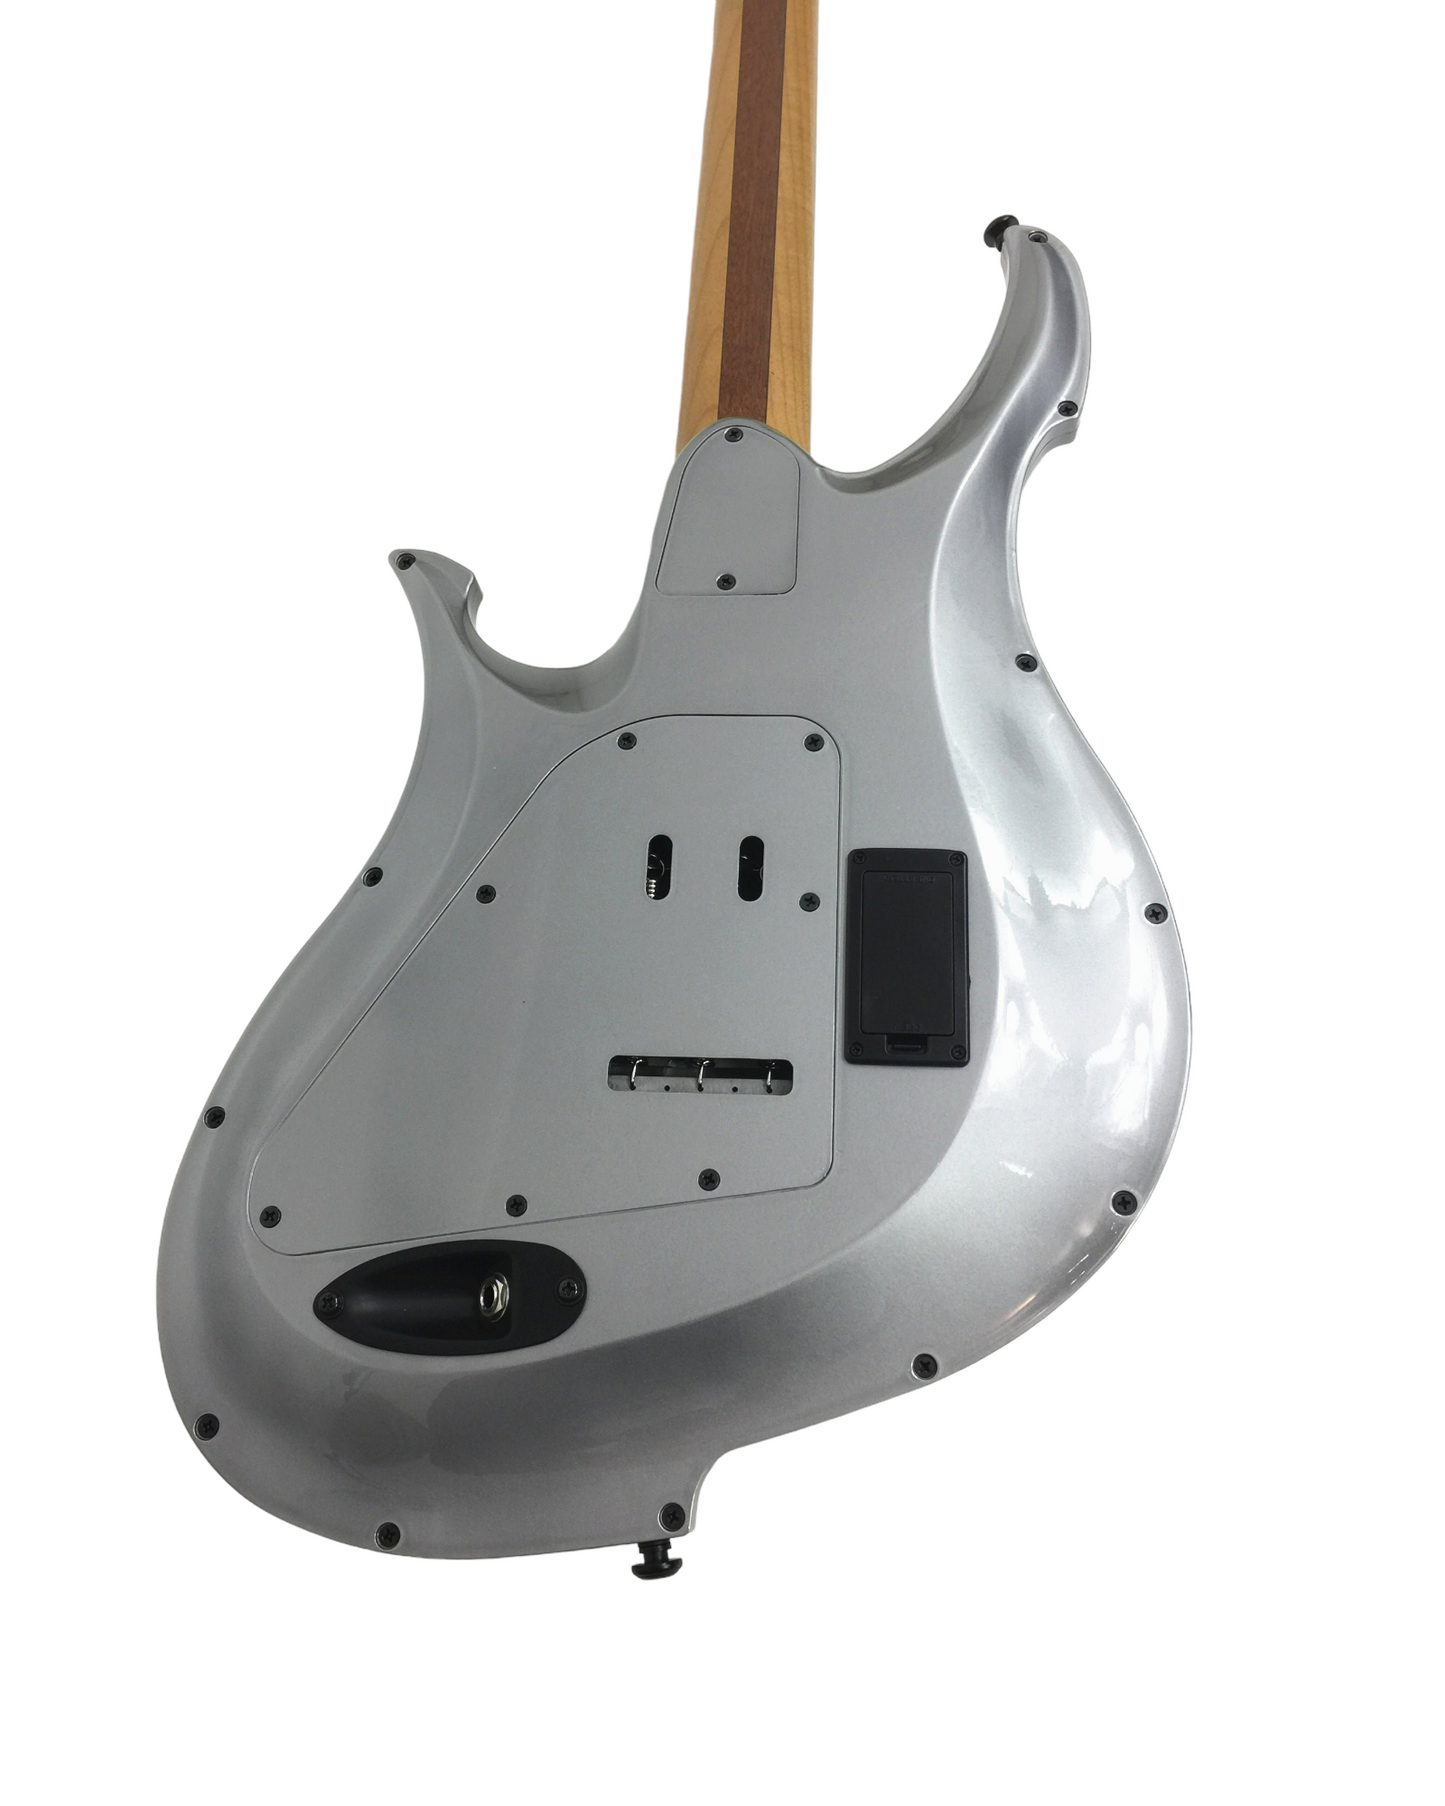 KOLOSS GT690MN3SV Silver Aluminum Body Roasted Maple Neck Electric Guitar + Bag